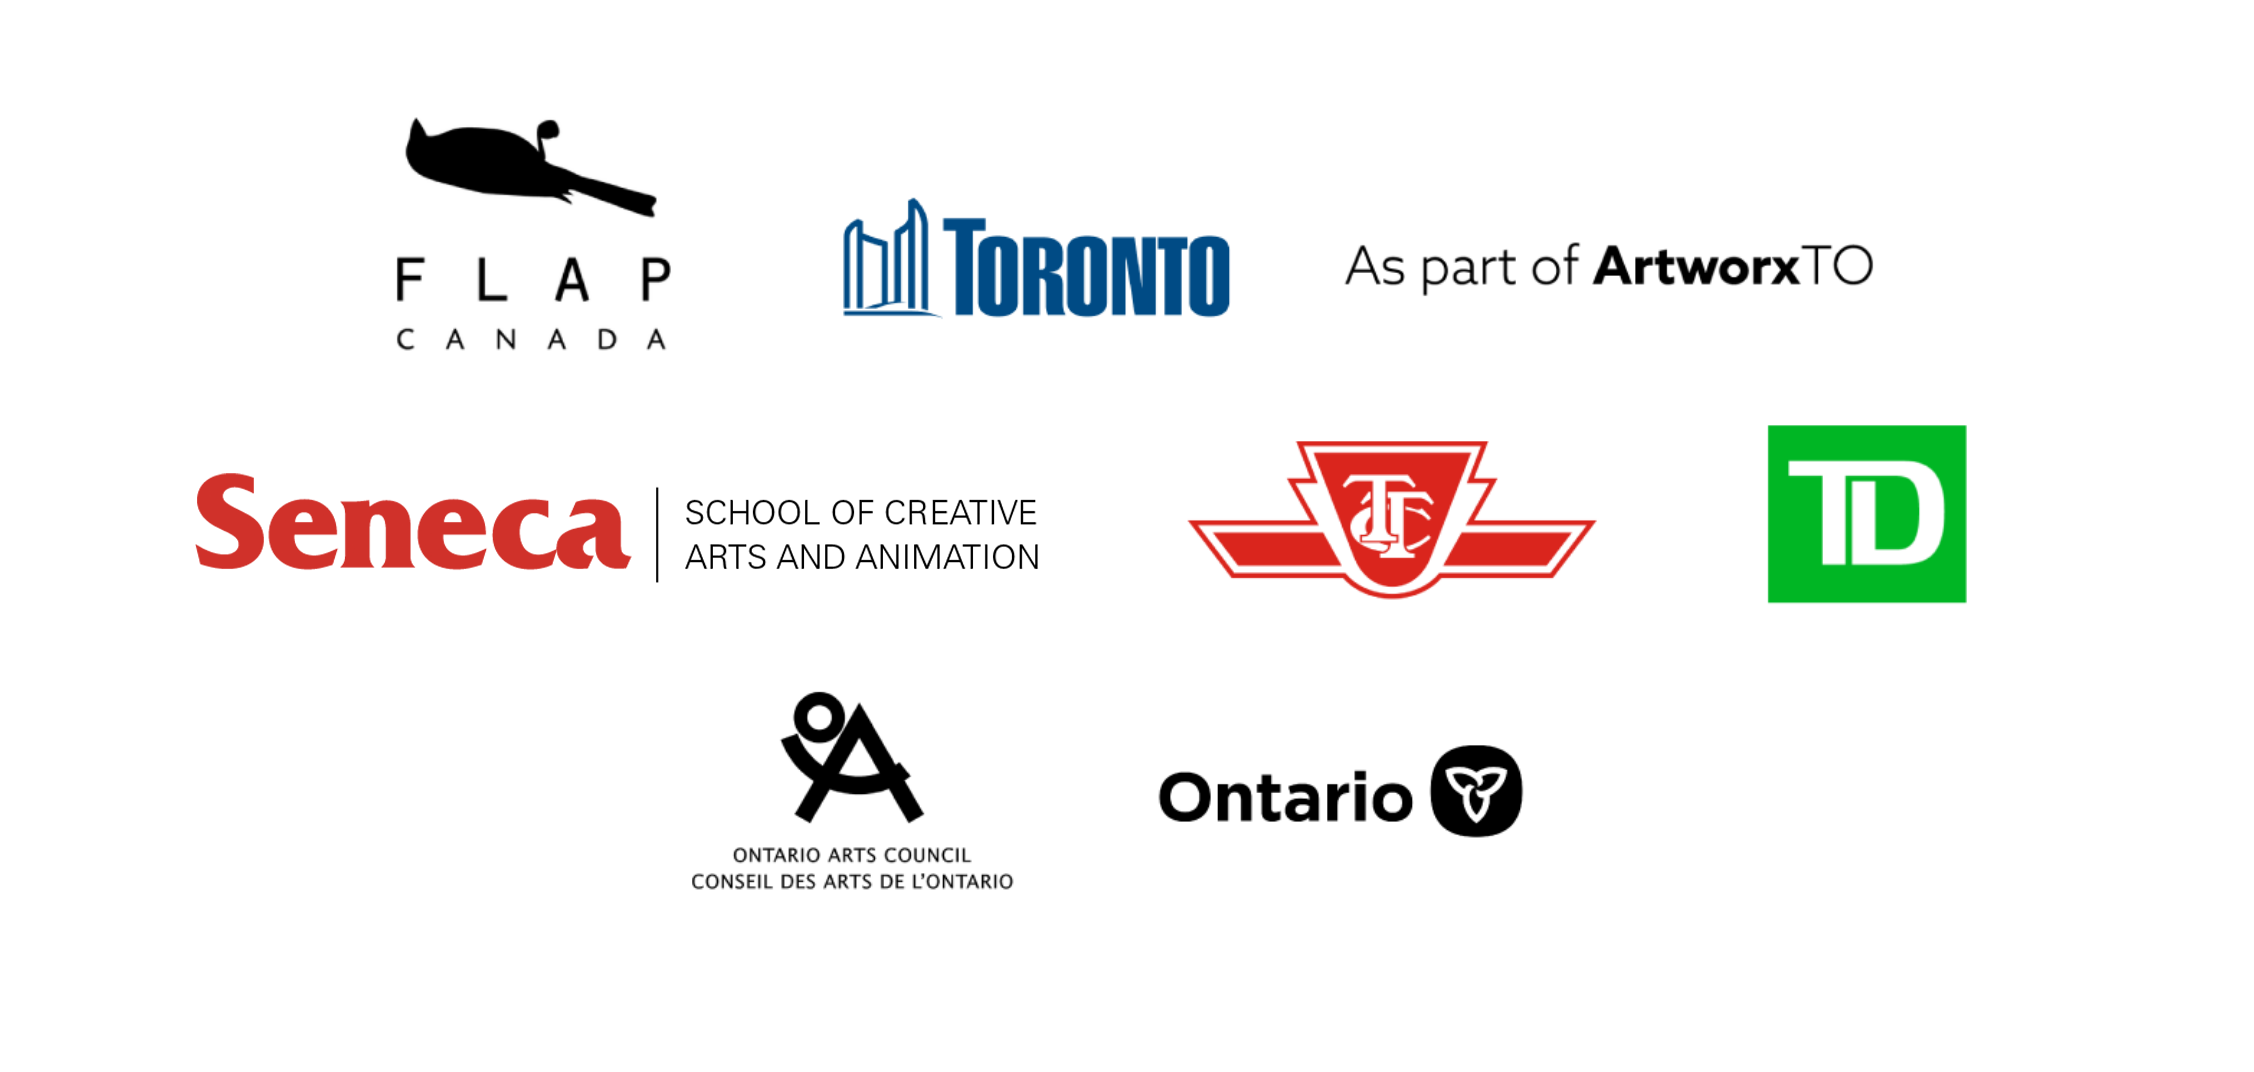 Funder logos for FLAP Canada, City of Toronto, ArtworxTO, TTC, TD Bank, Ontario Arts Council, Government of Ontario